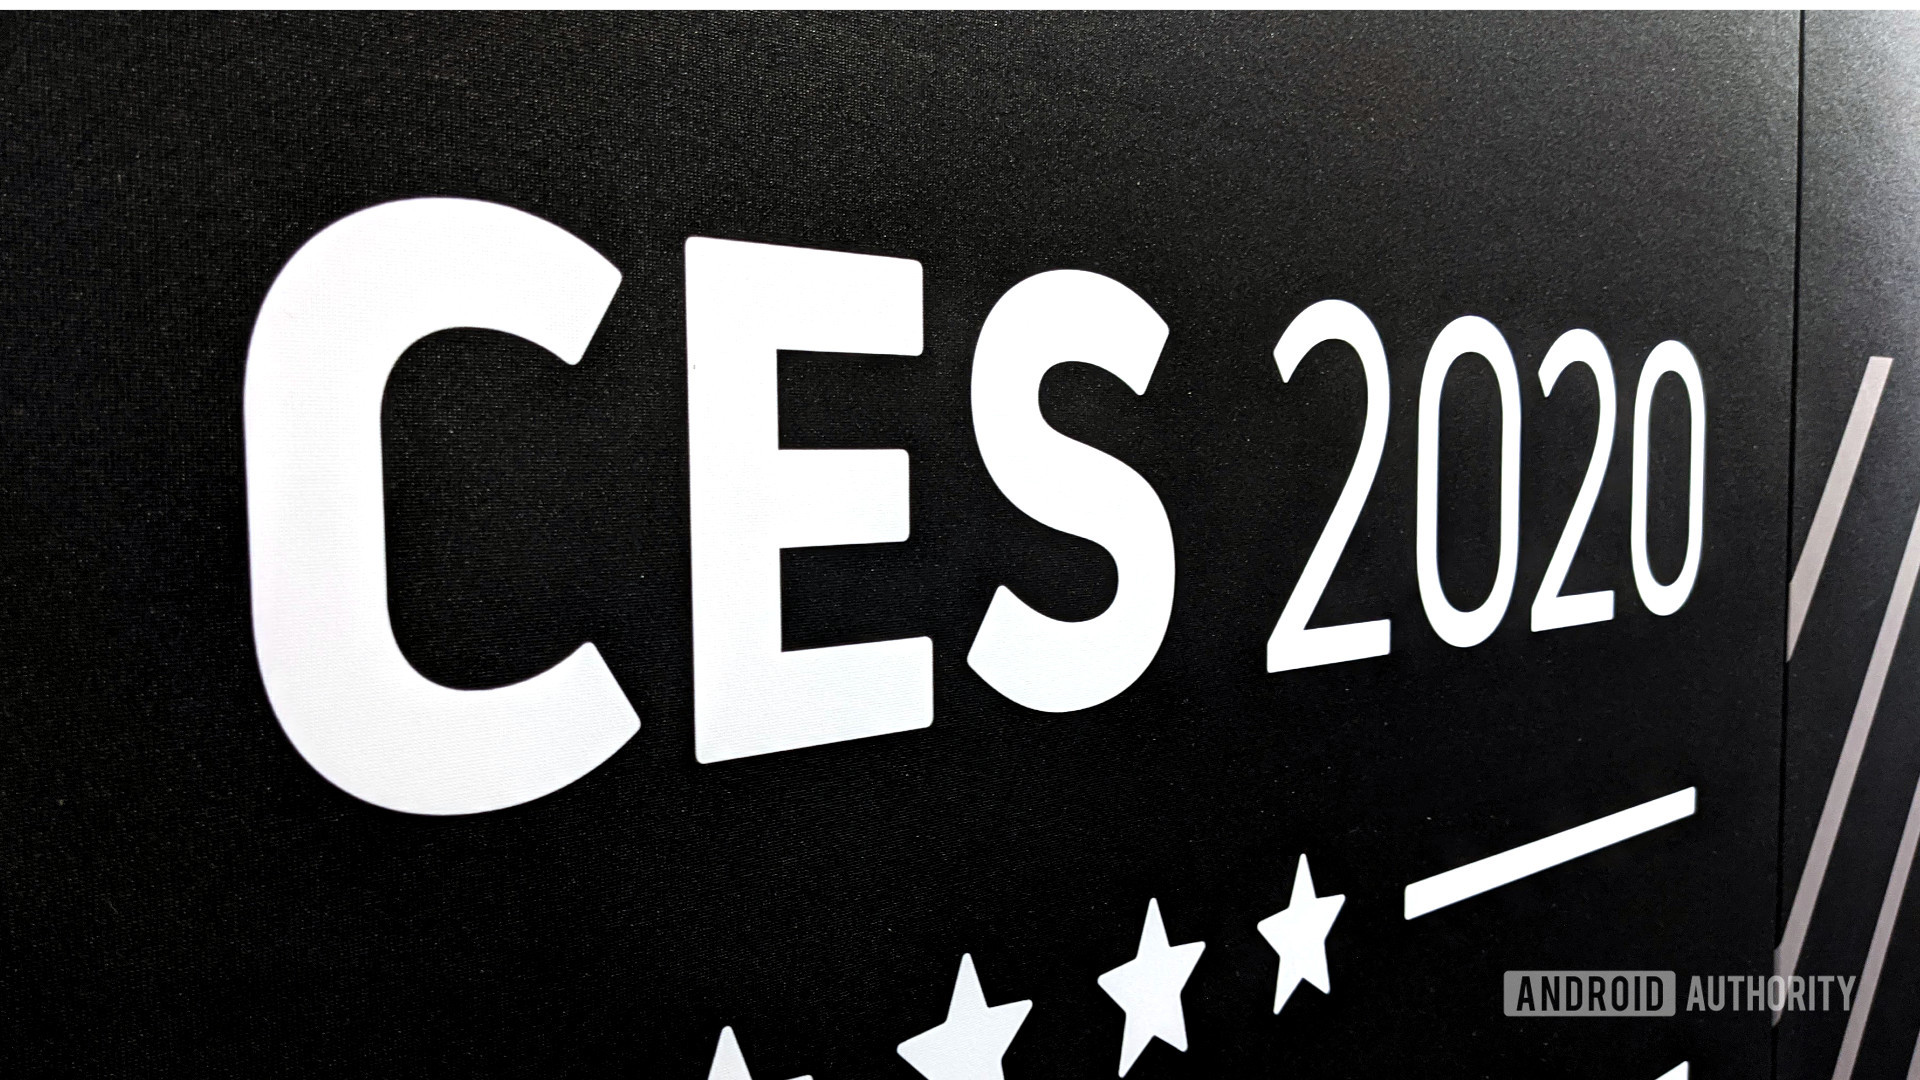 CES 2020 logo angle aa